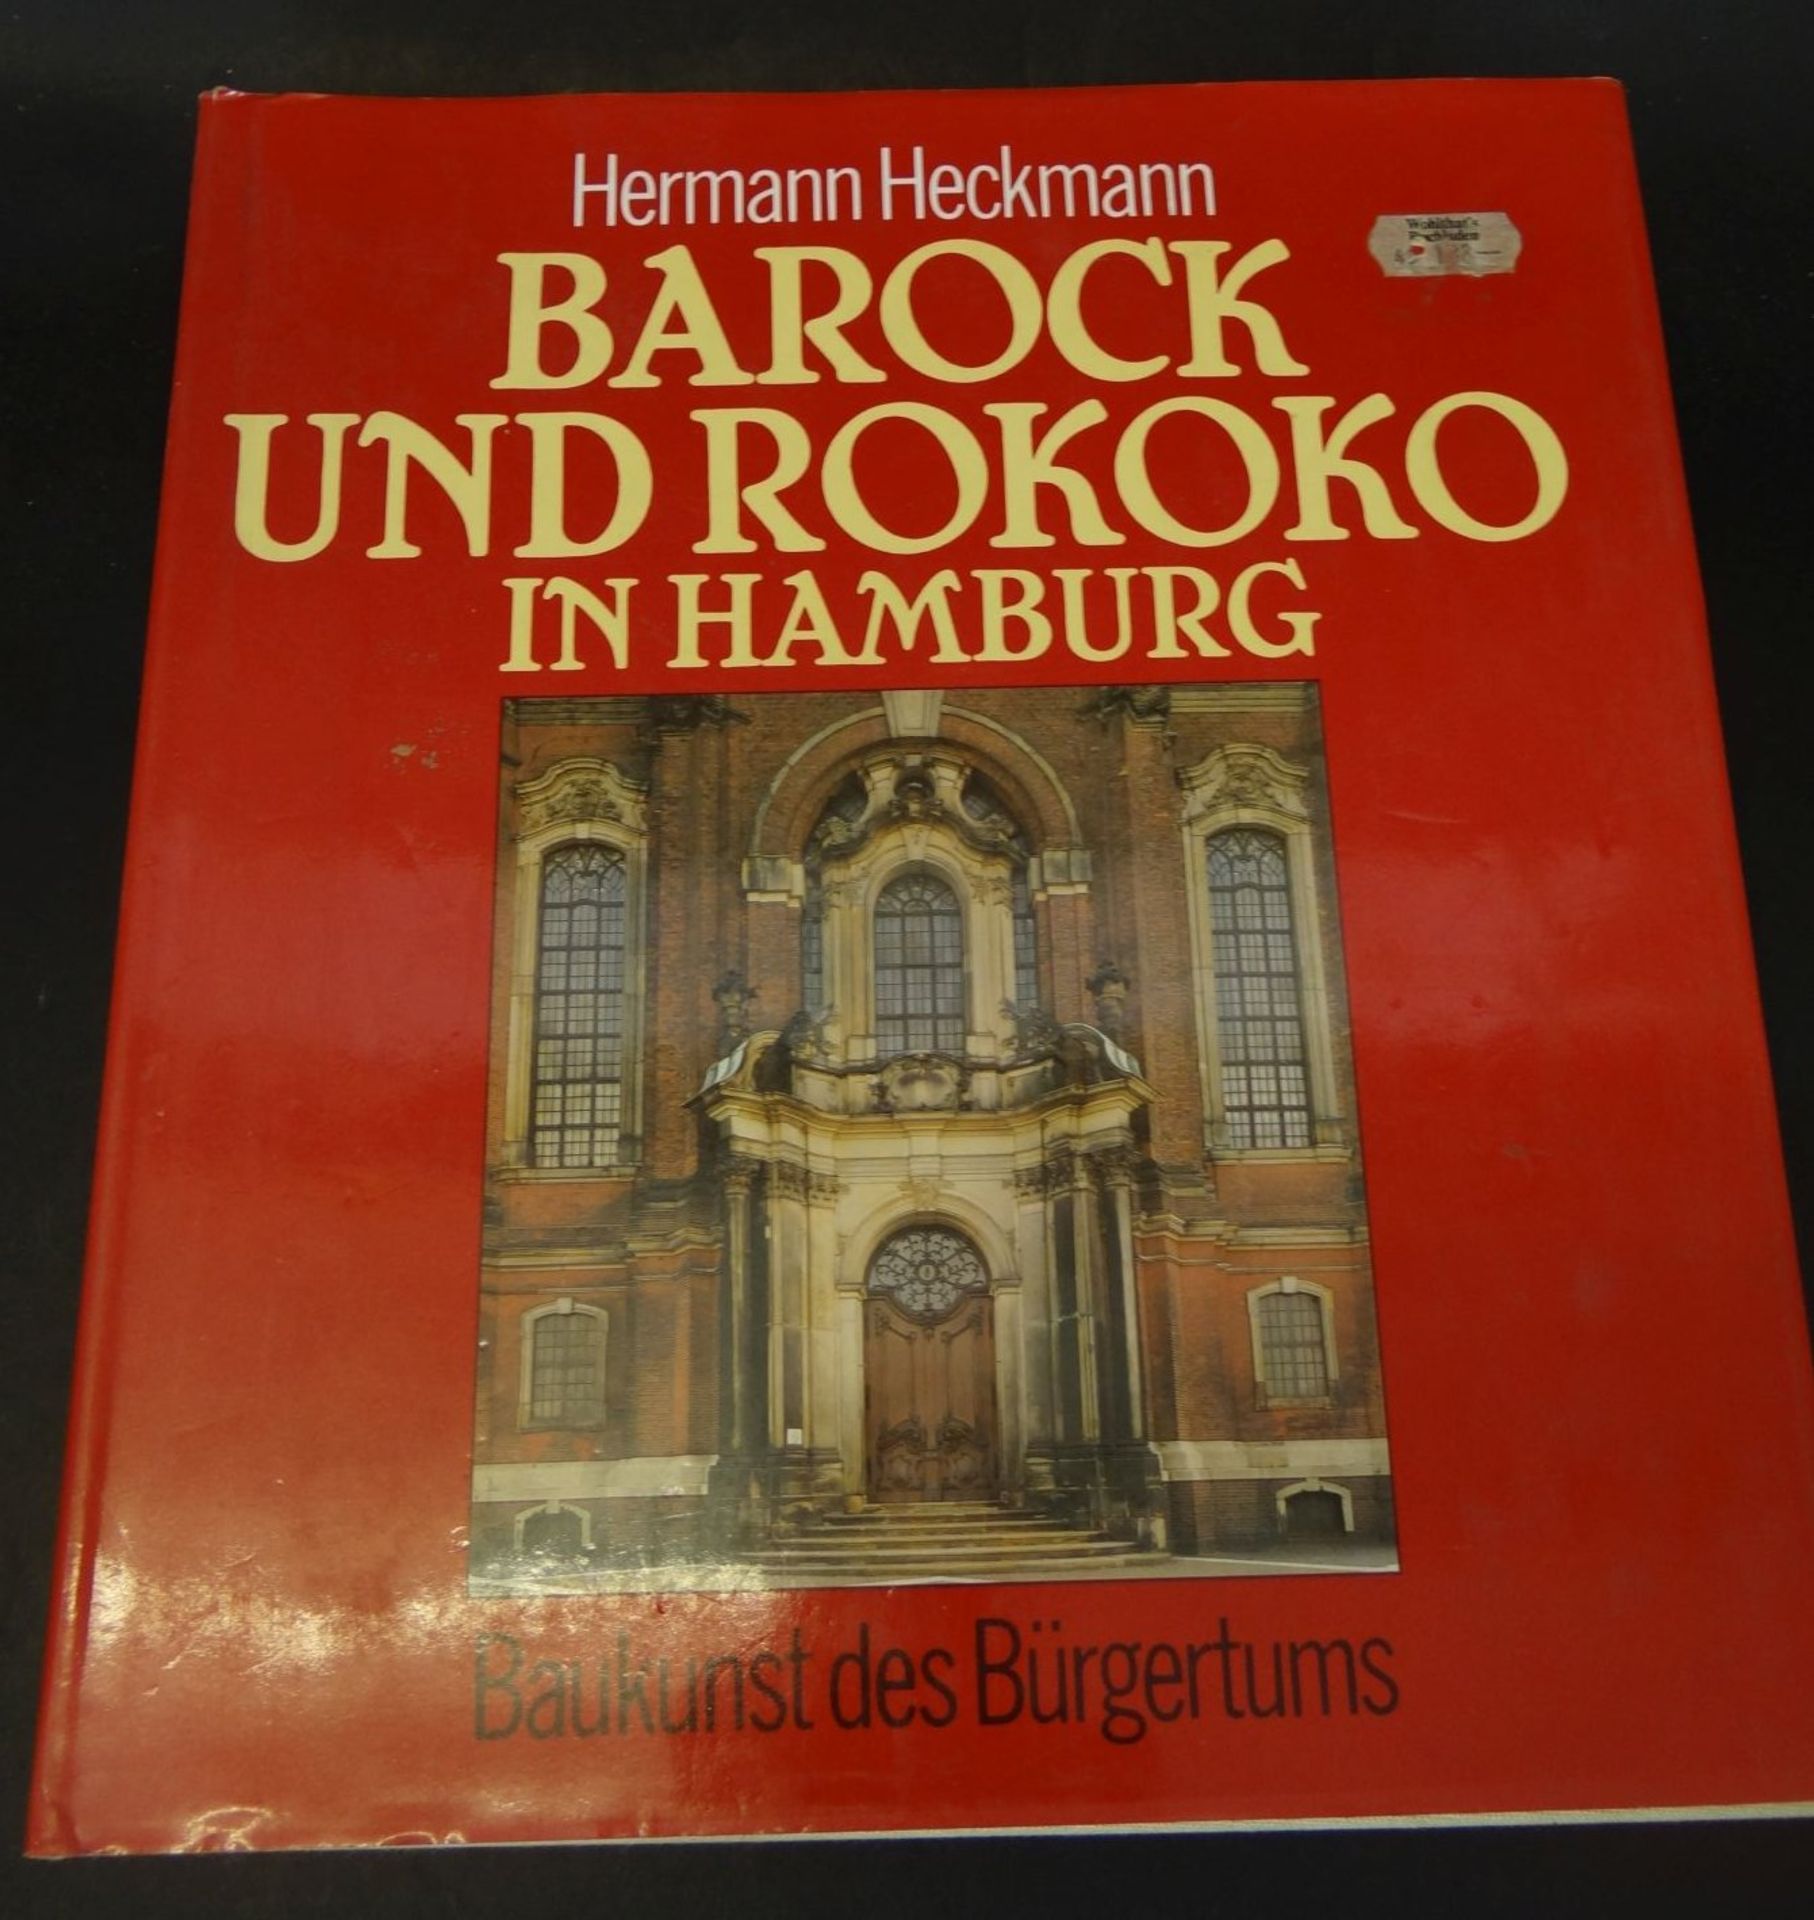 Grossbildband "Barock und Rokoko in Hamburg", guter Zustand